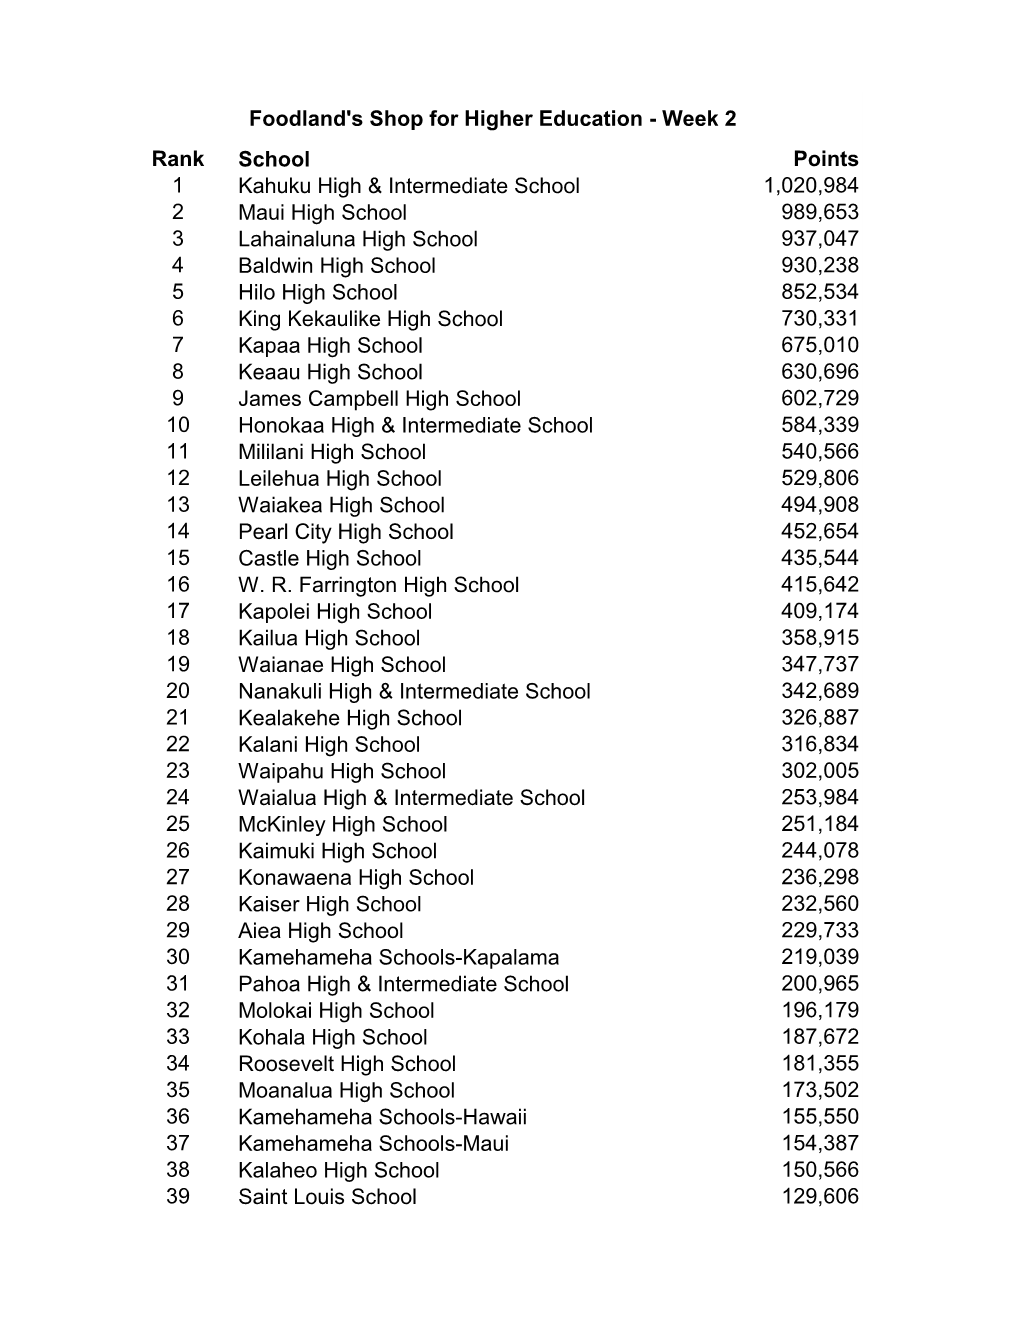 Rank School Points 1 Kahuku High & Intermediate School 1,020,984 2